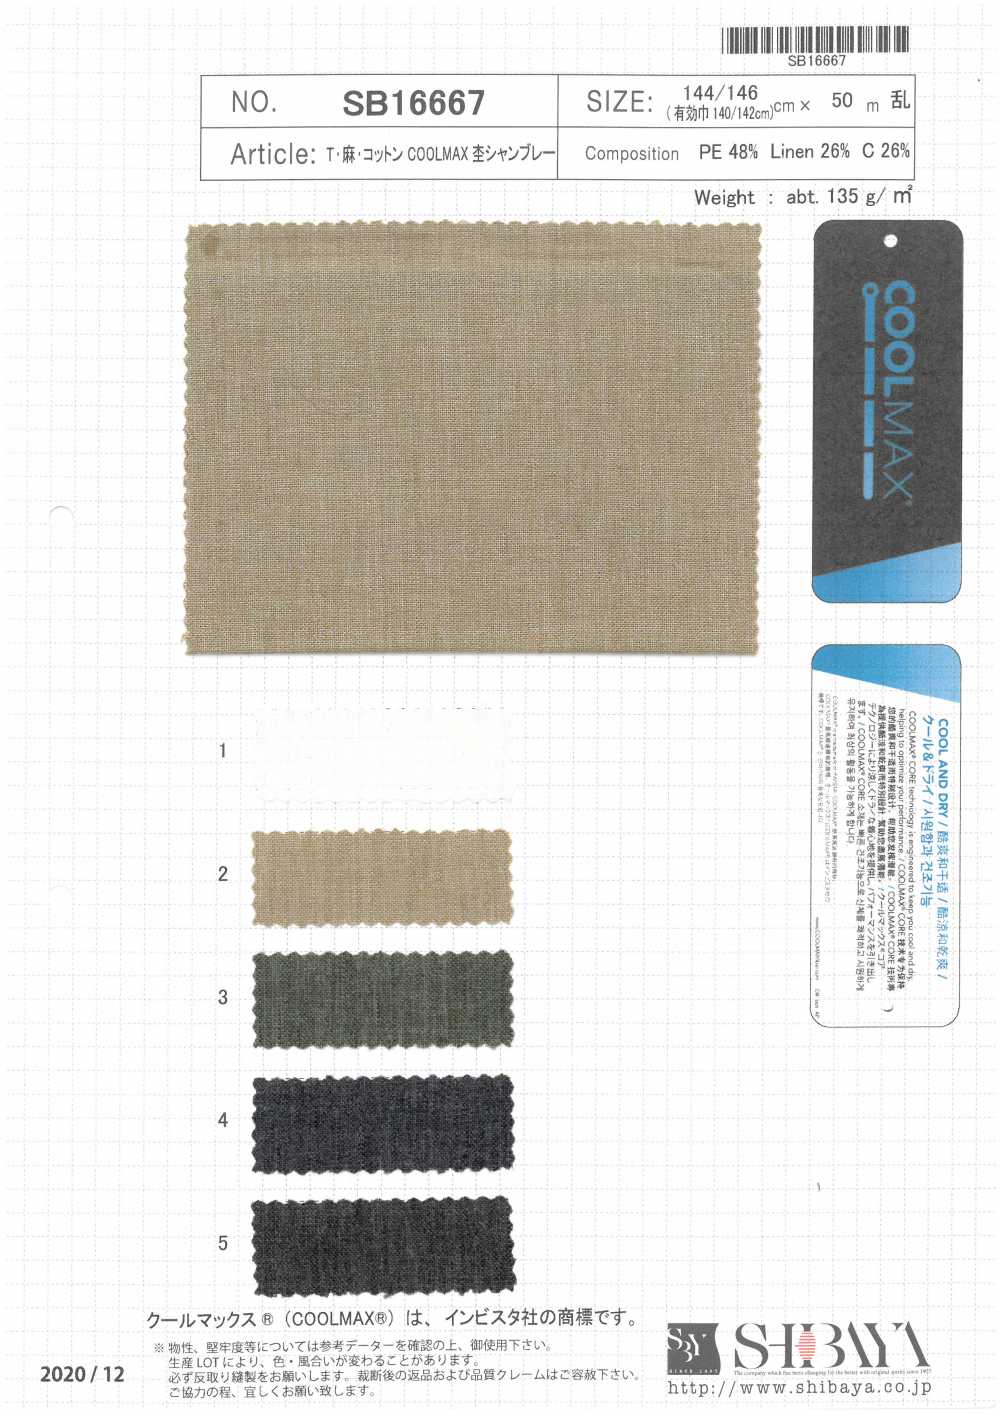 SB16667 [OUTLET] T / Lin/ Coton COOLMAX Chambray Chiné[Fabrication De Textile] SHIBAYA